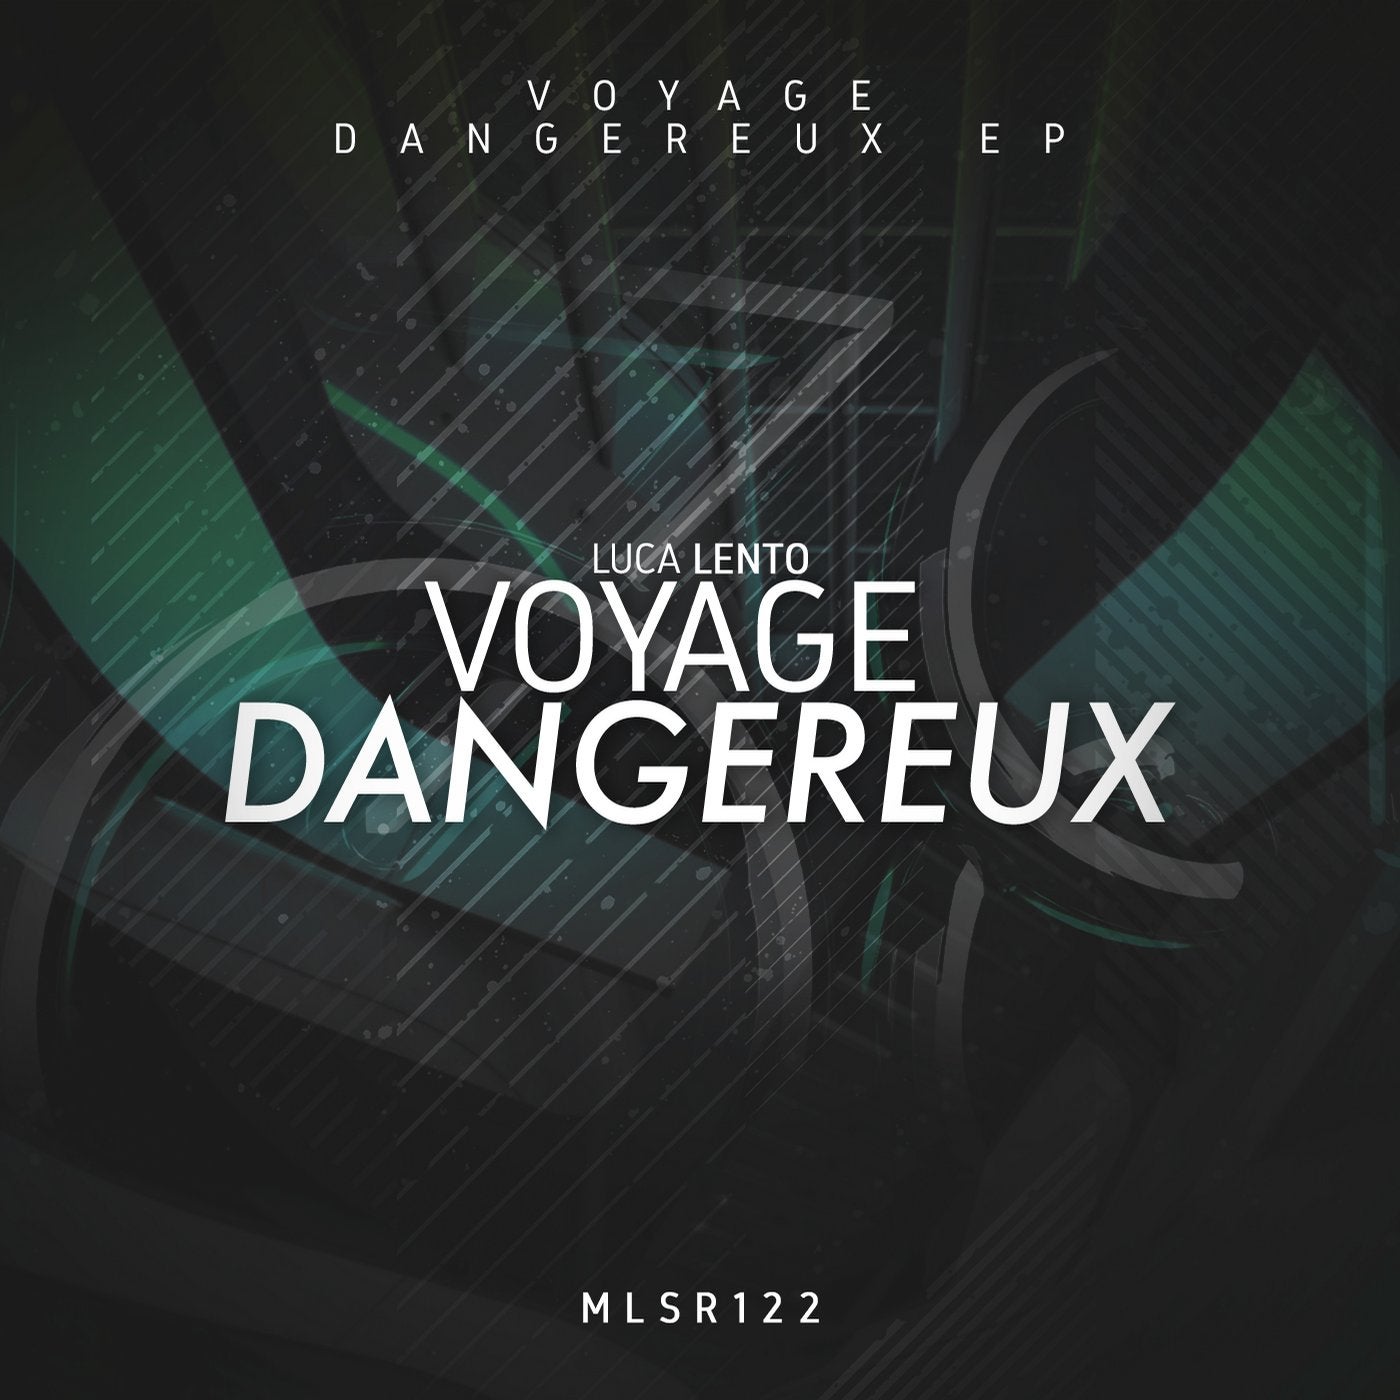 Voyage Dangereux EP